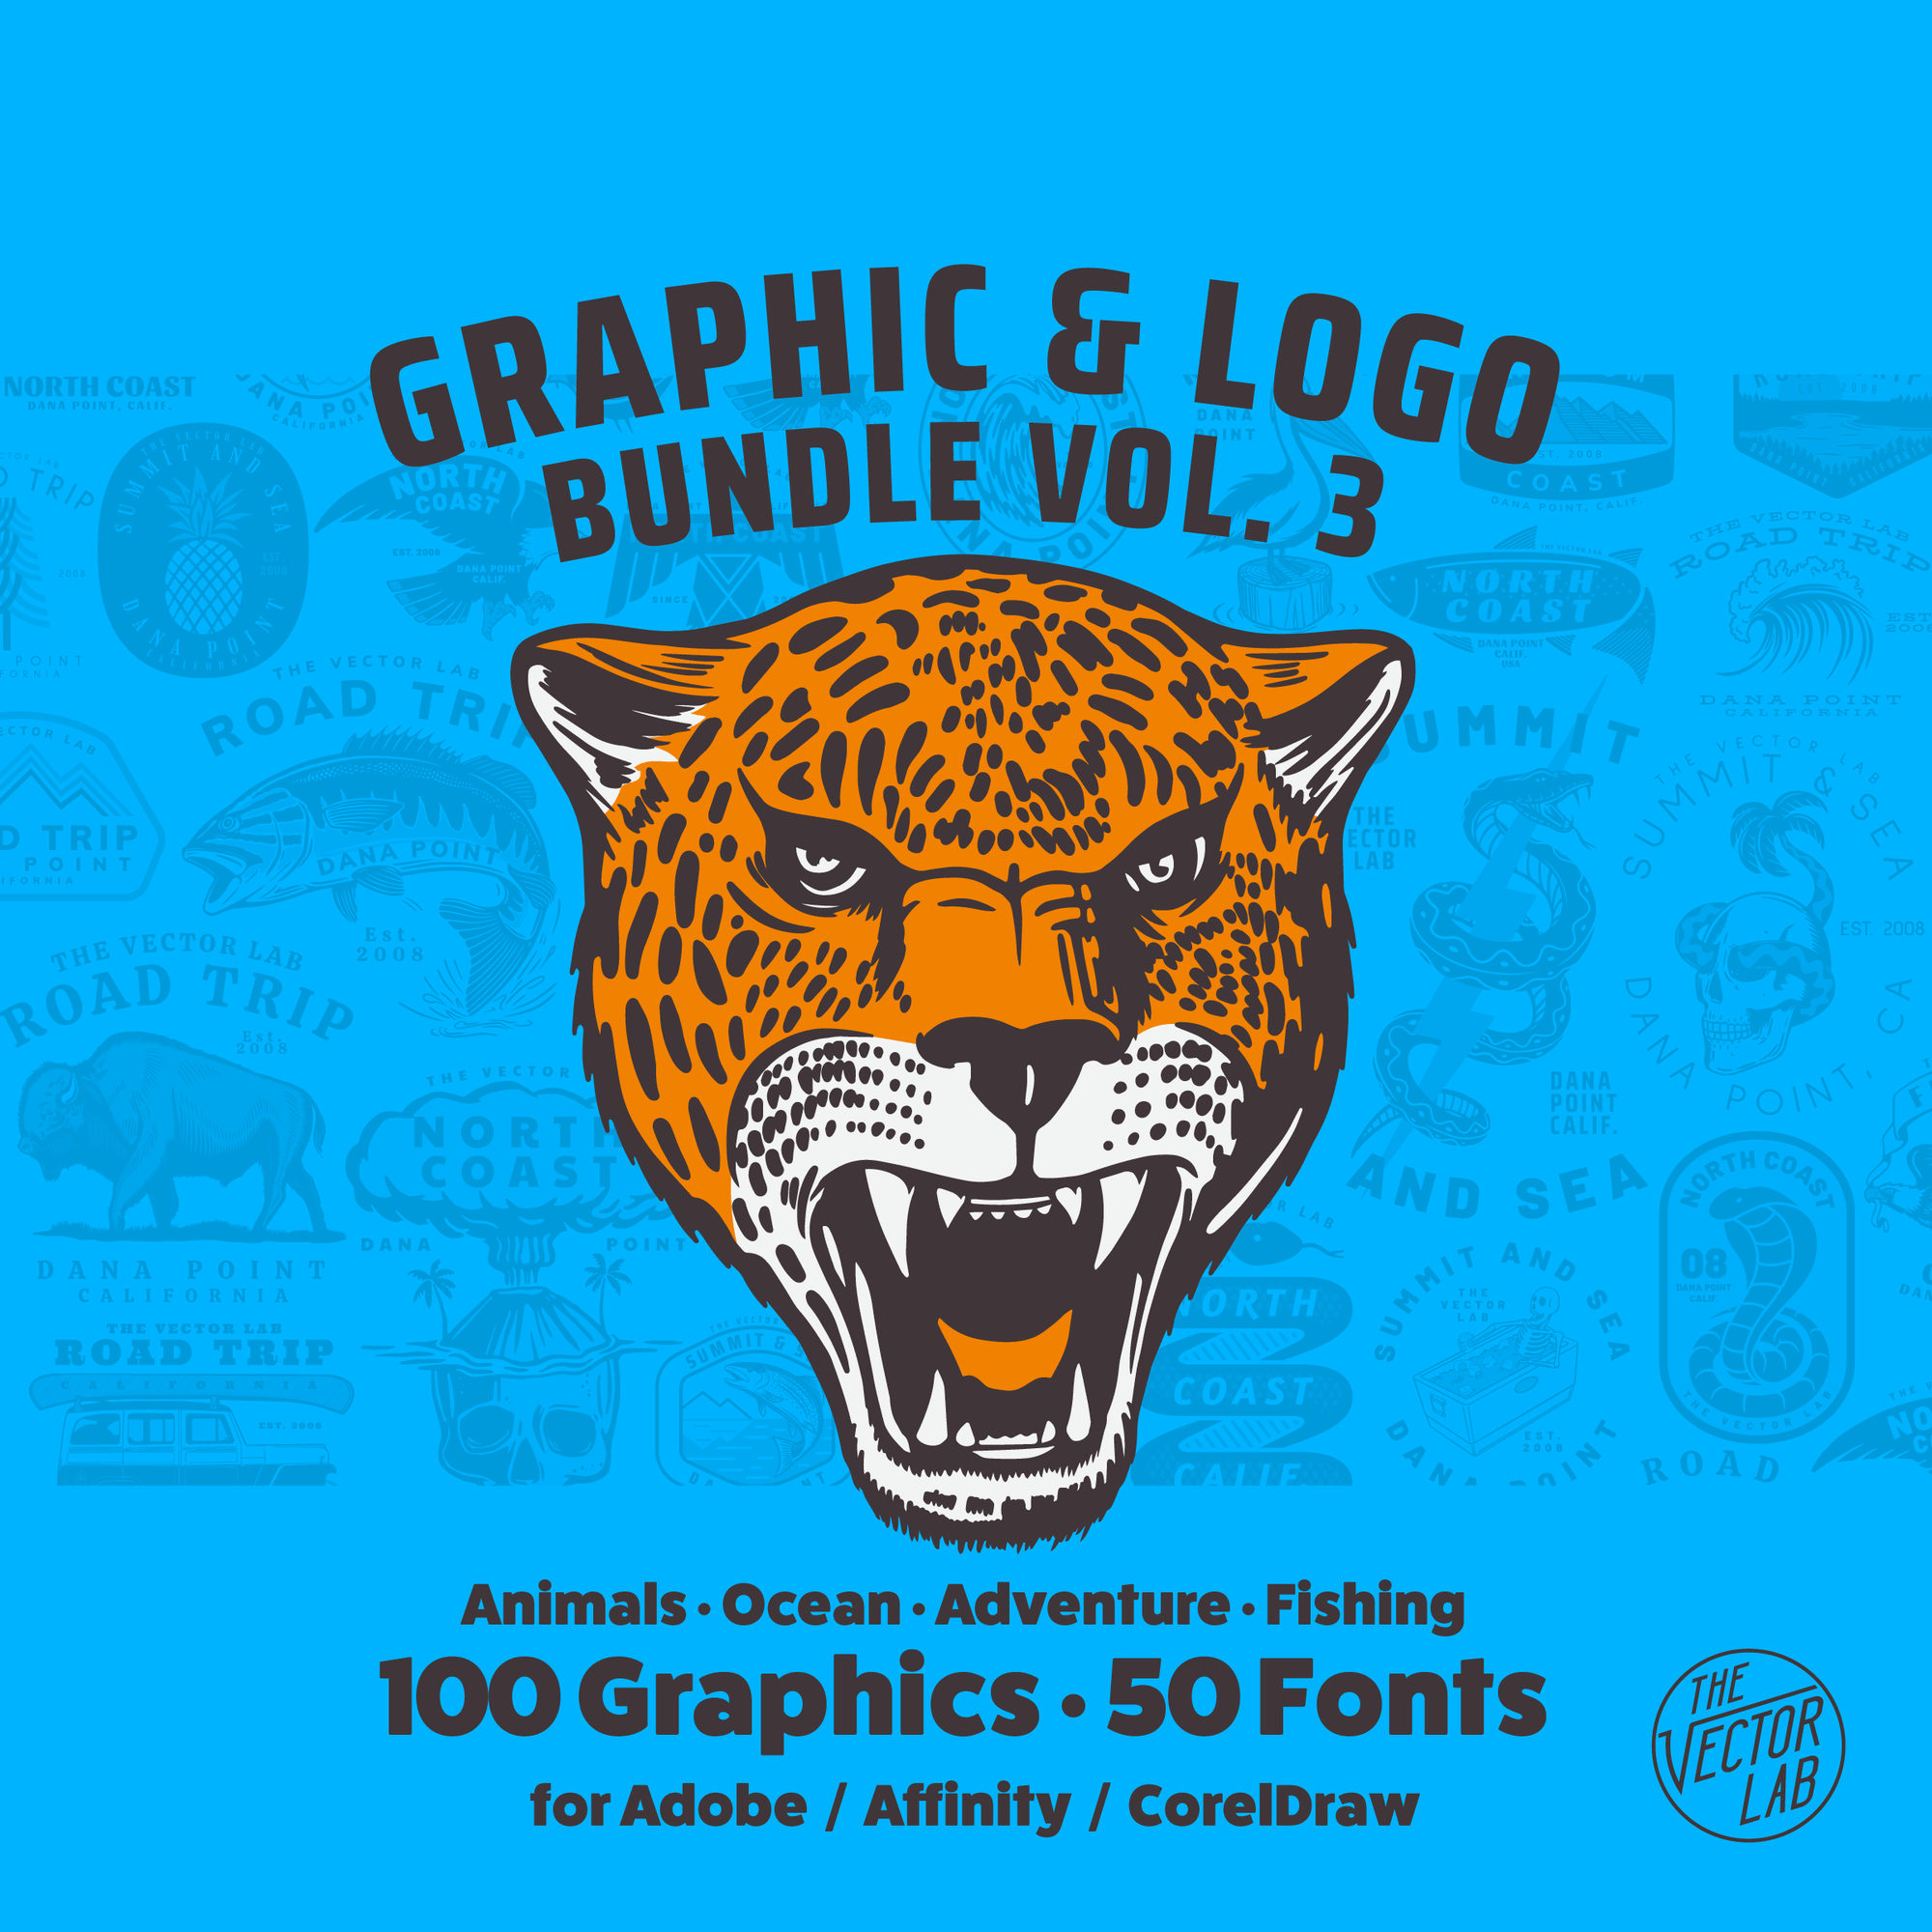 Graphic & Logo Bundle Vol 3 - For Adobe, Affinity, CorelDraw